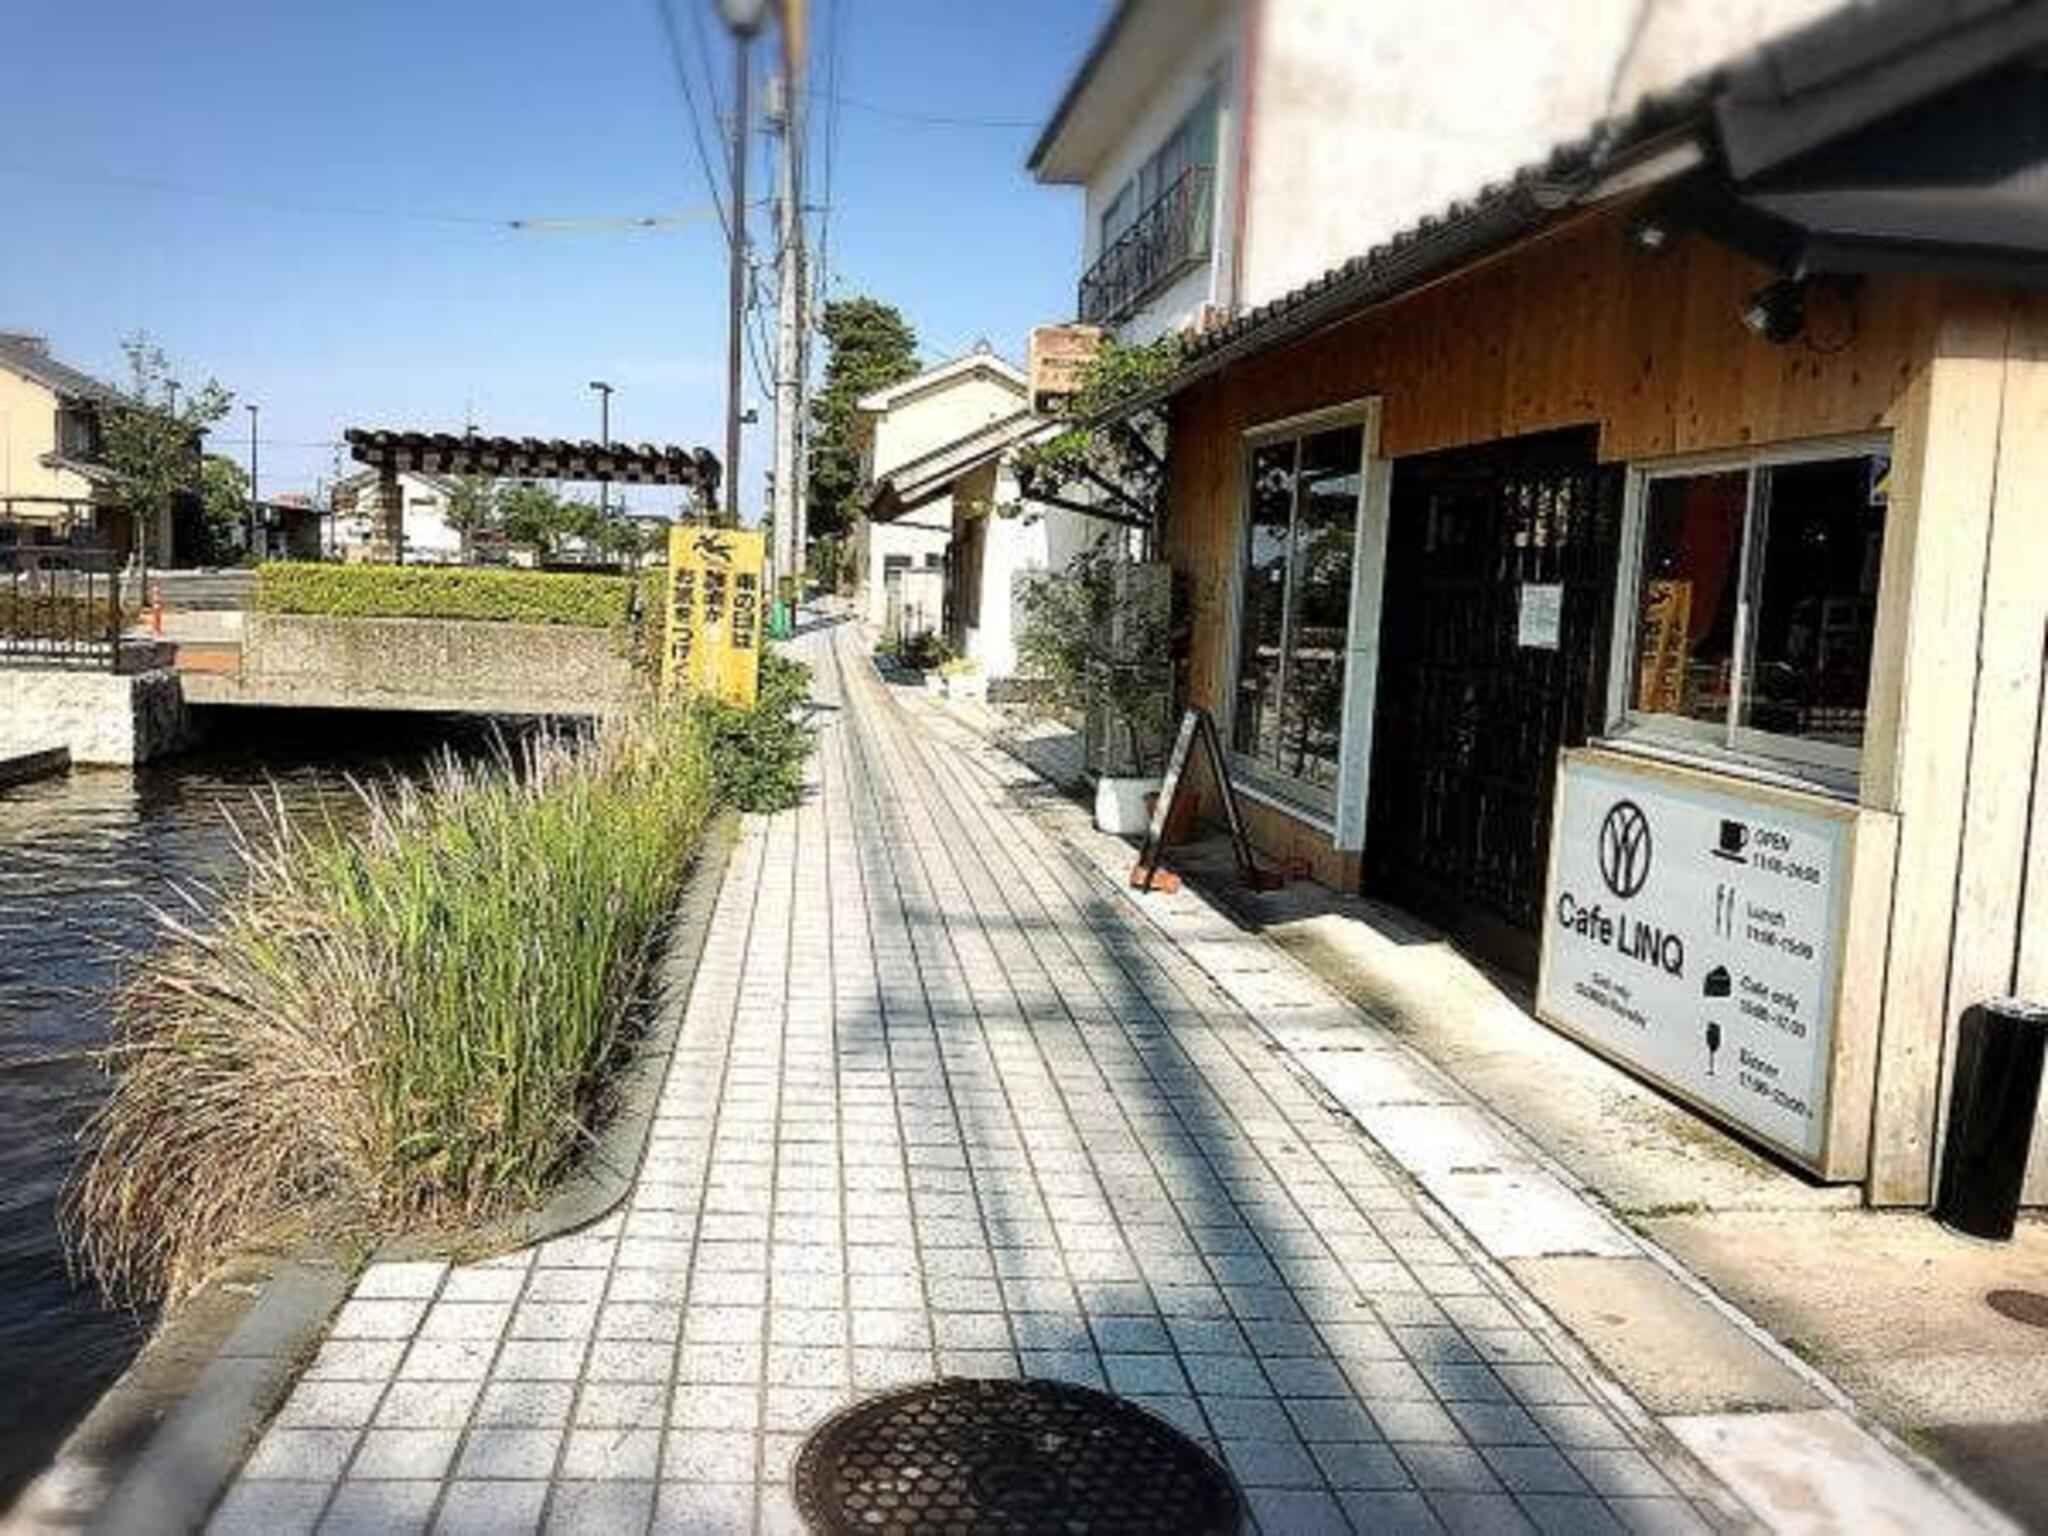 Cafe LINQ Takasegawa(カフェ リンクタカセガワ)の代表写真4